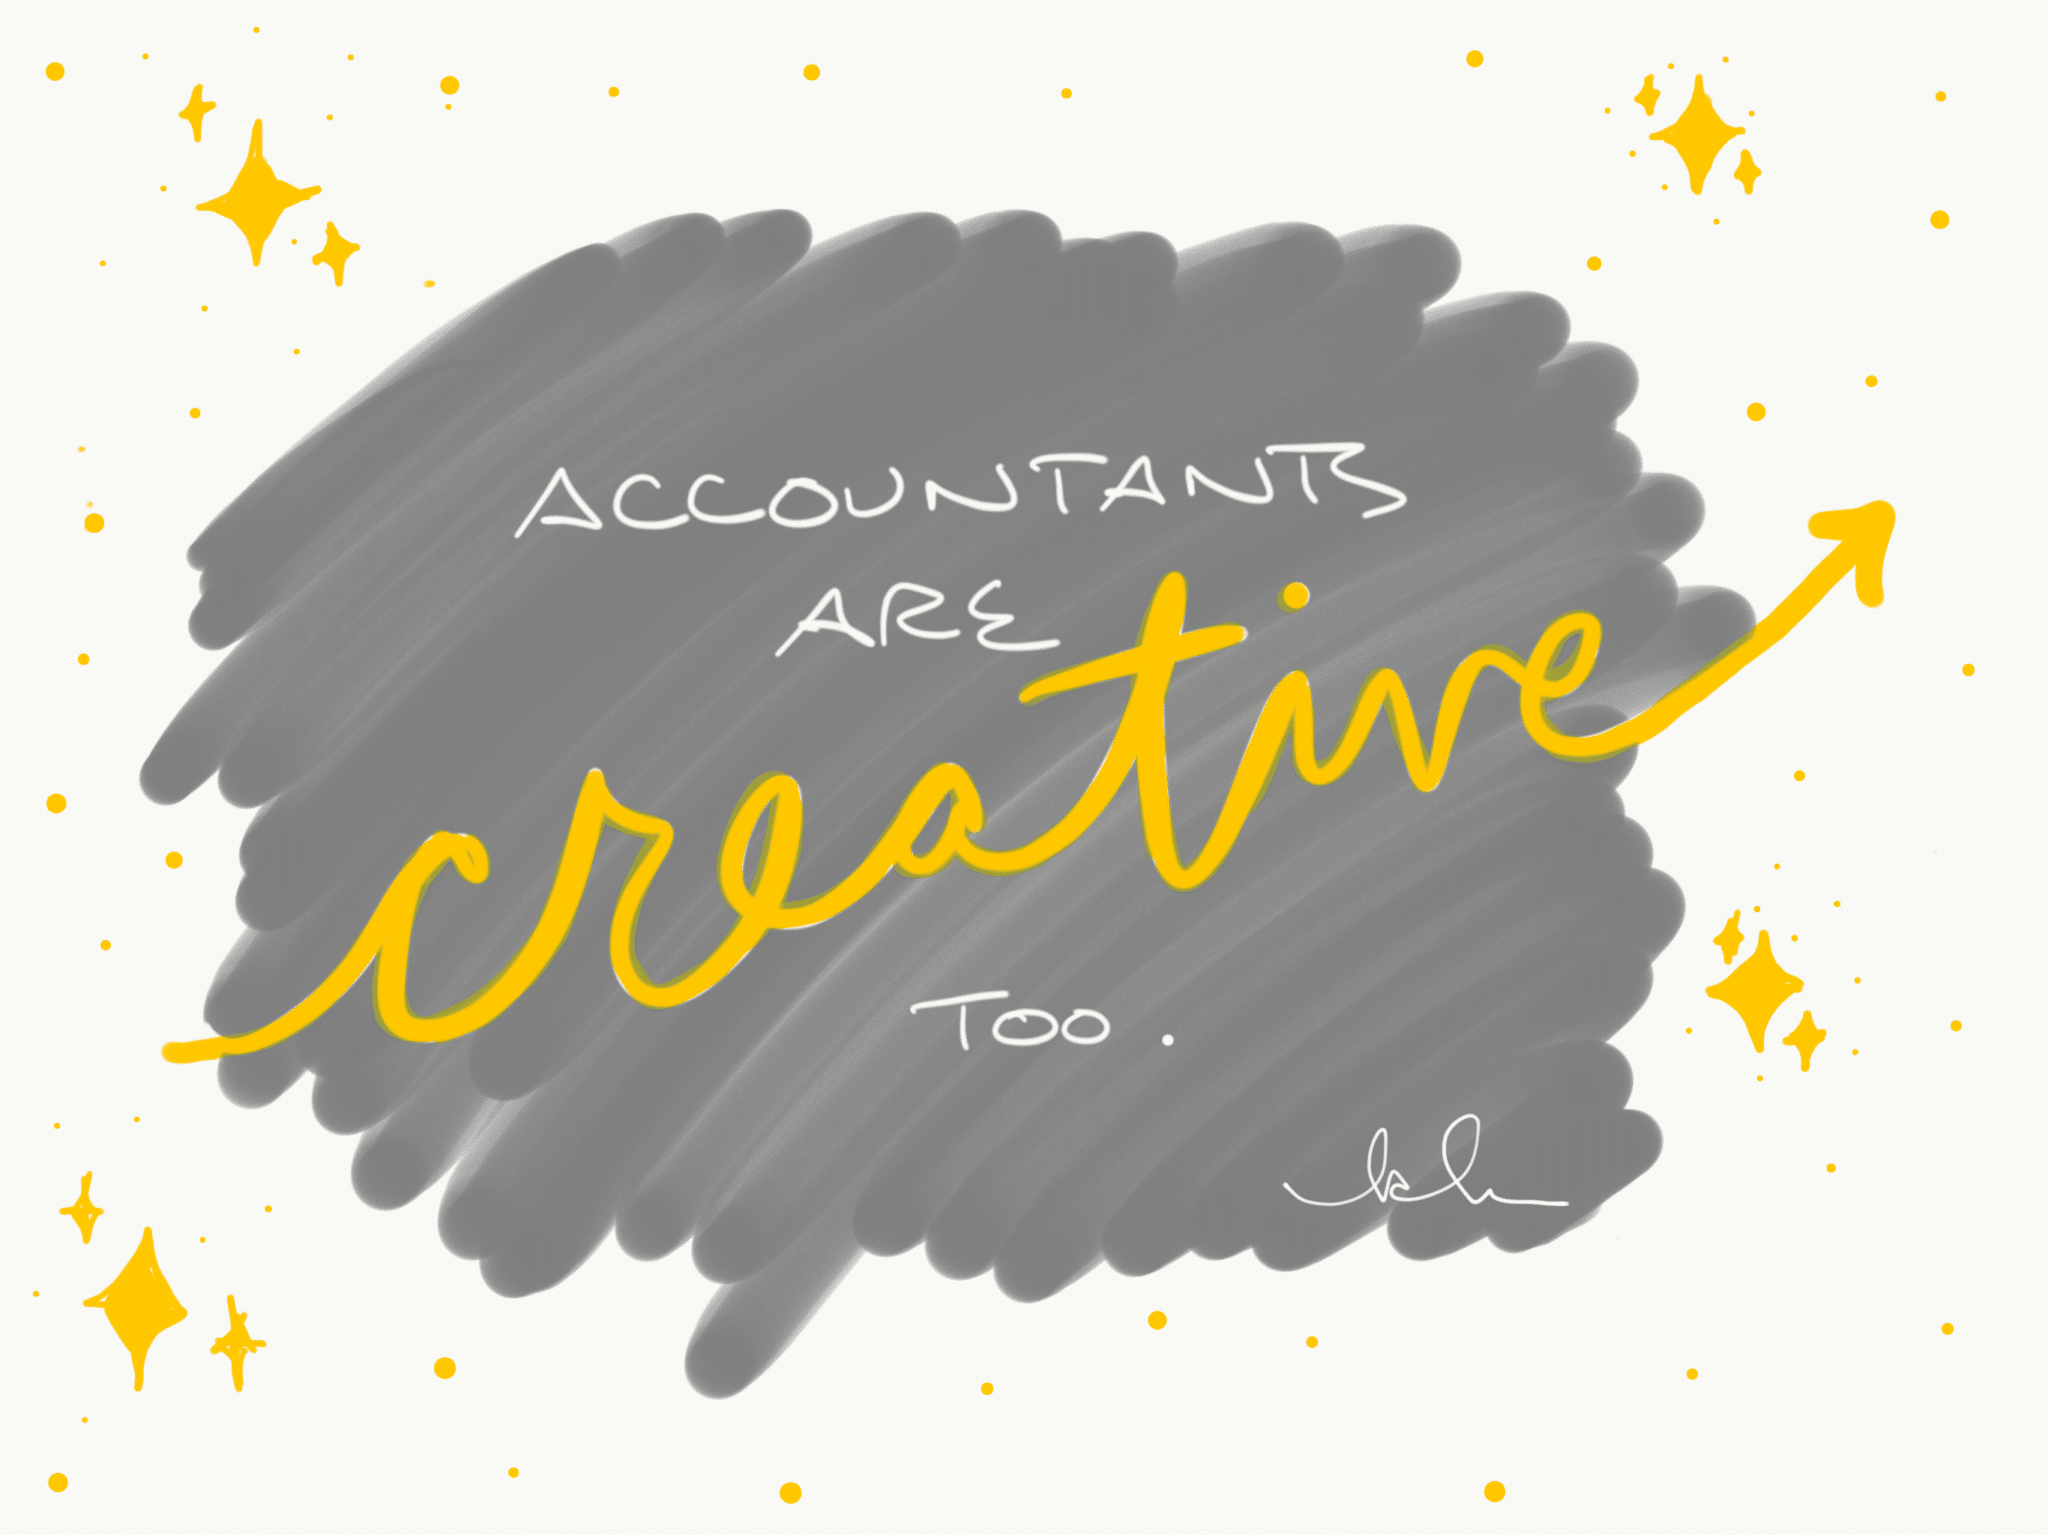 accountants creative too KLR notes